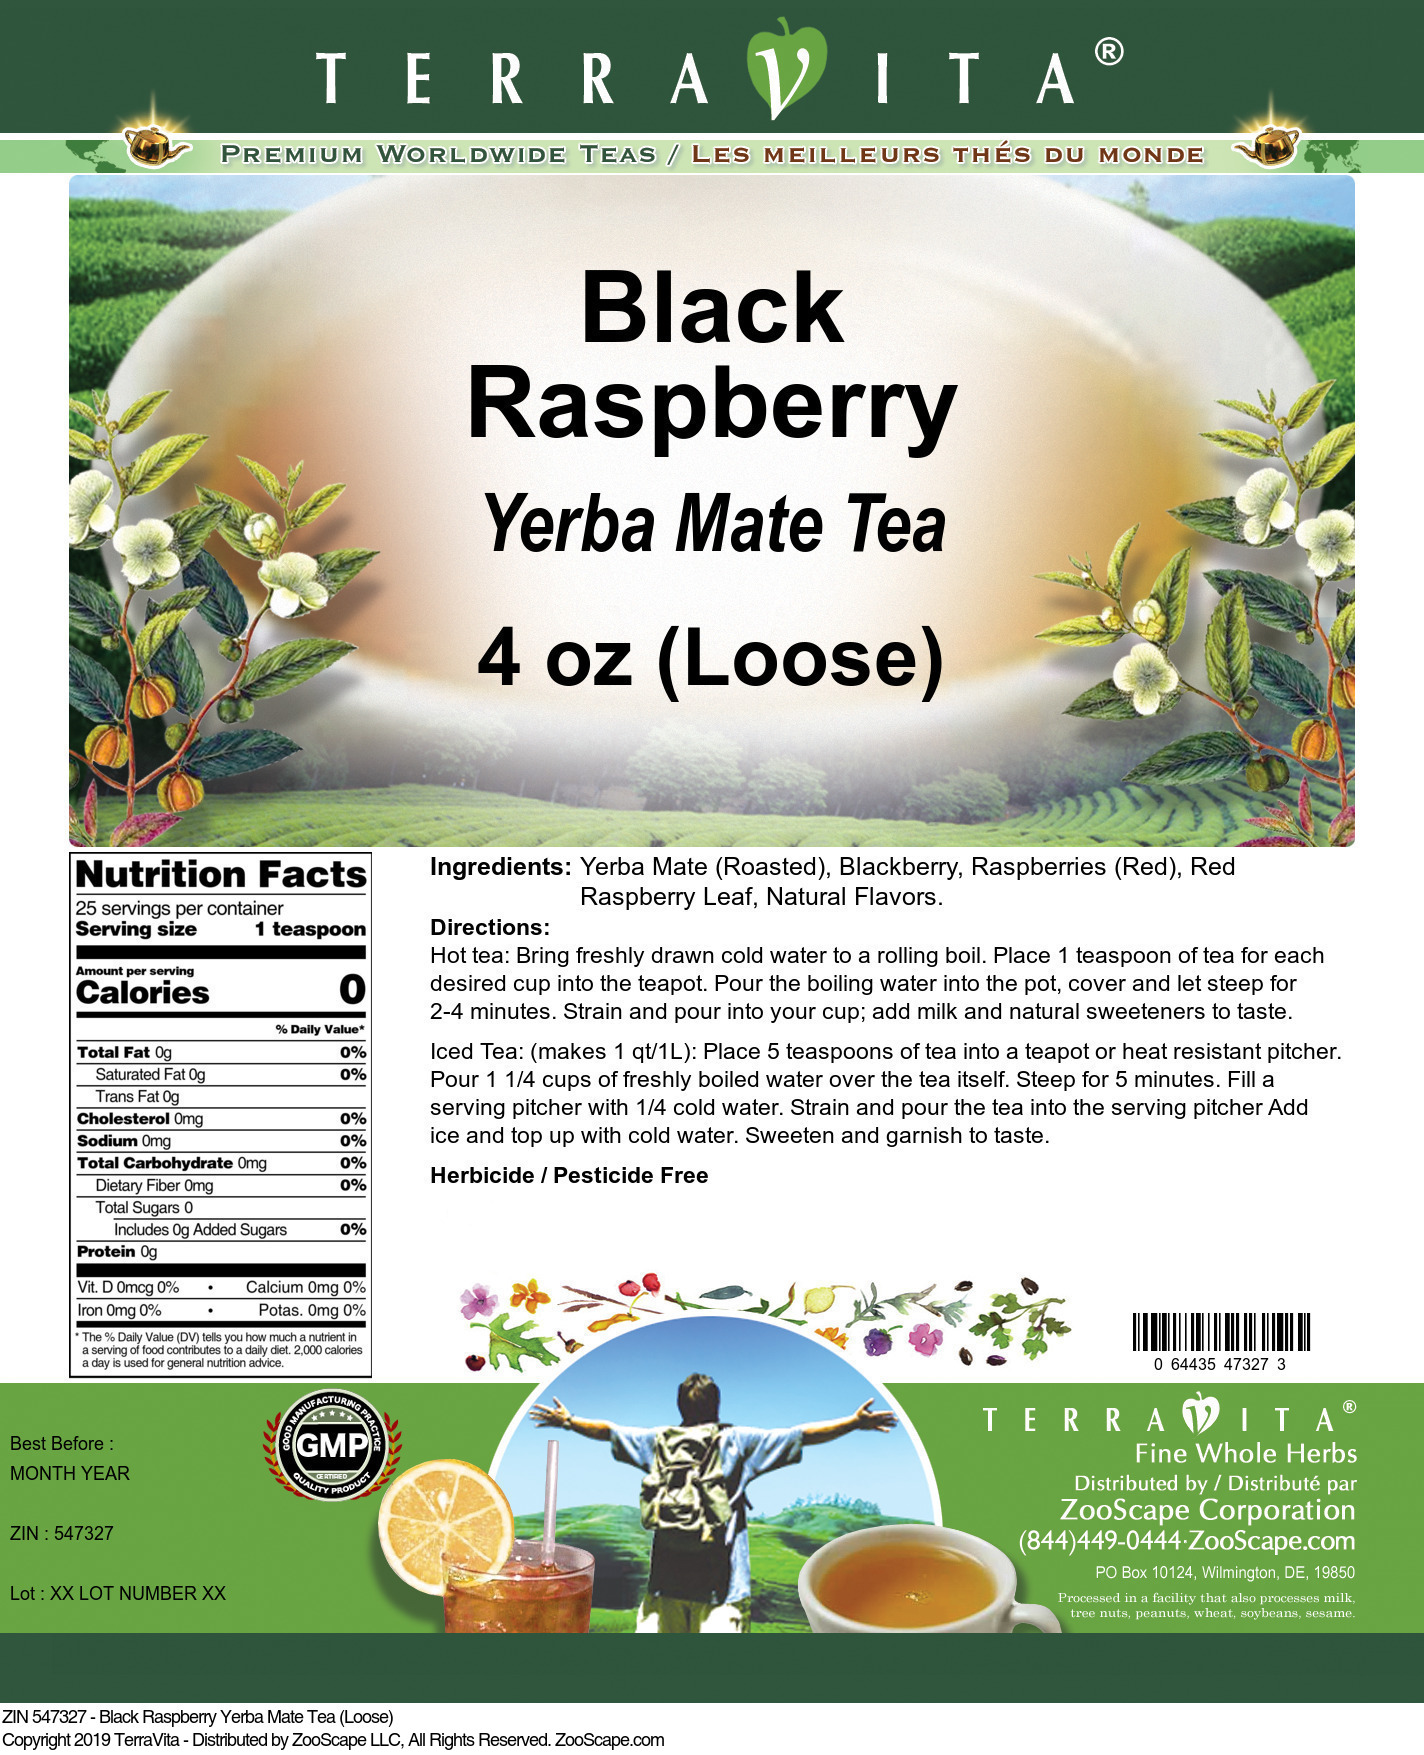 Black Raspberry Yerba Mate Tea (Loose) - Label